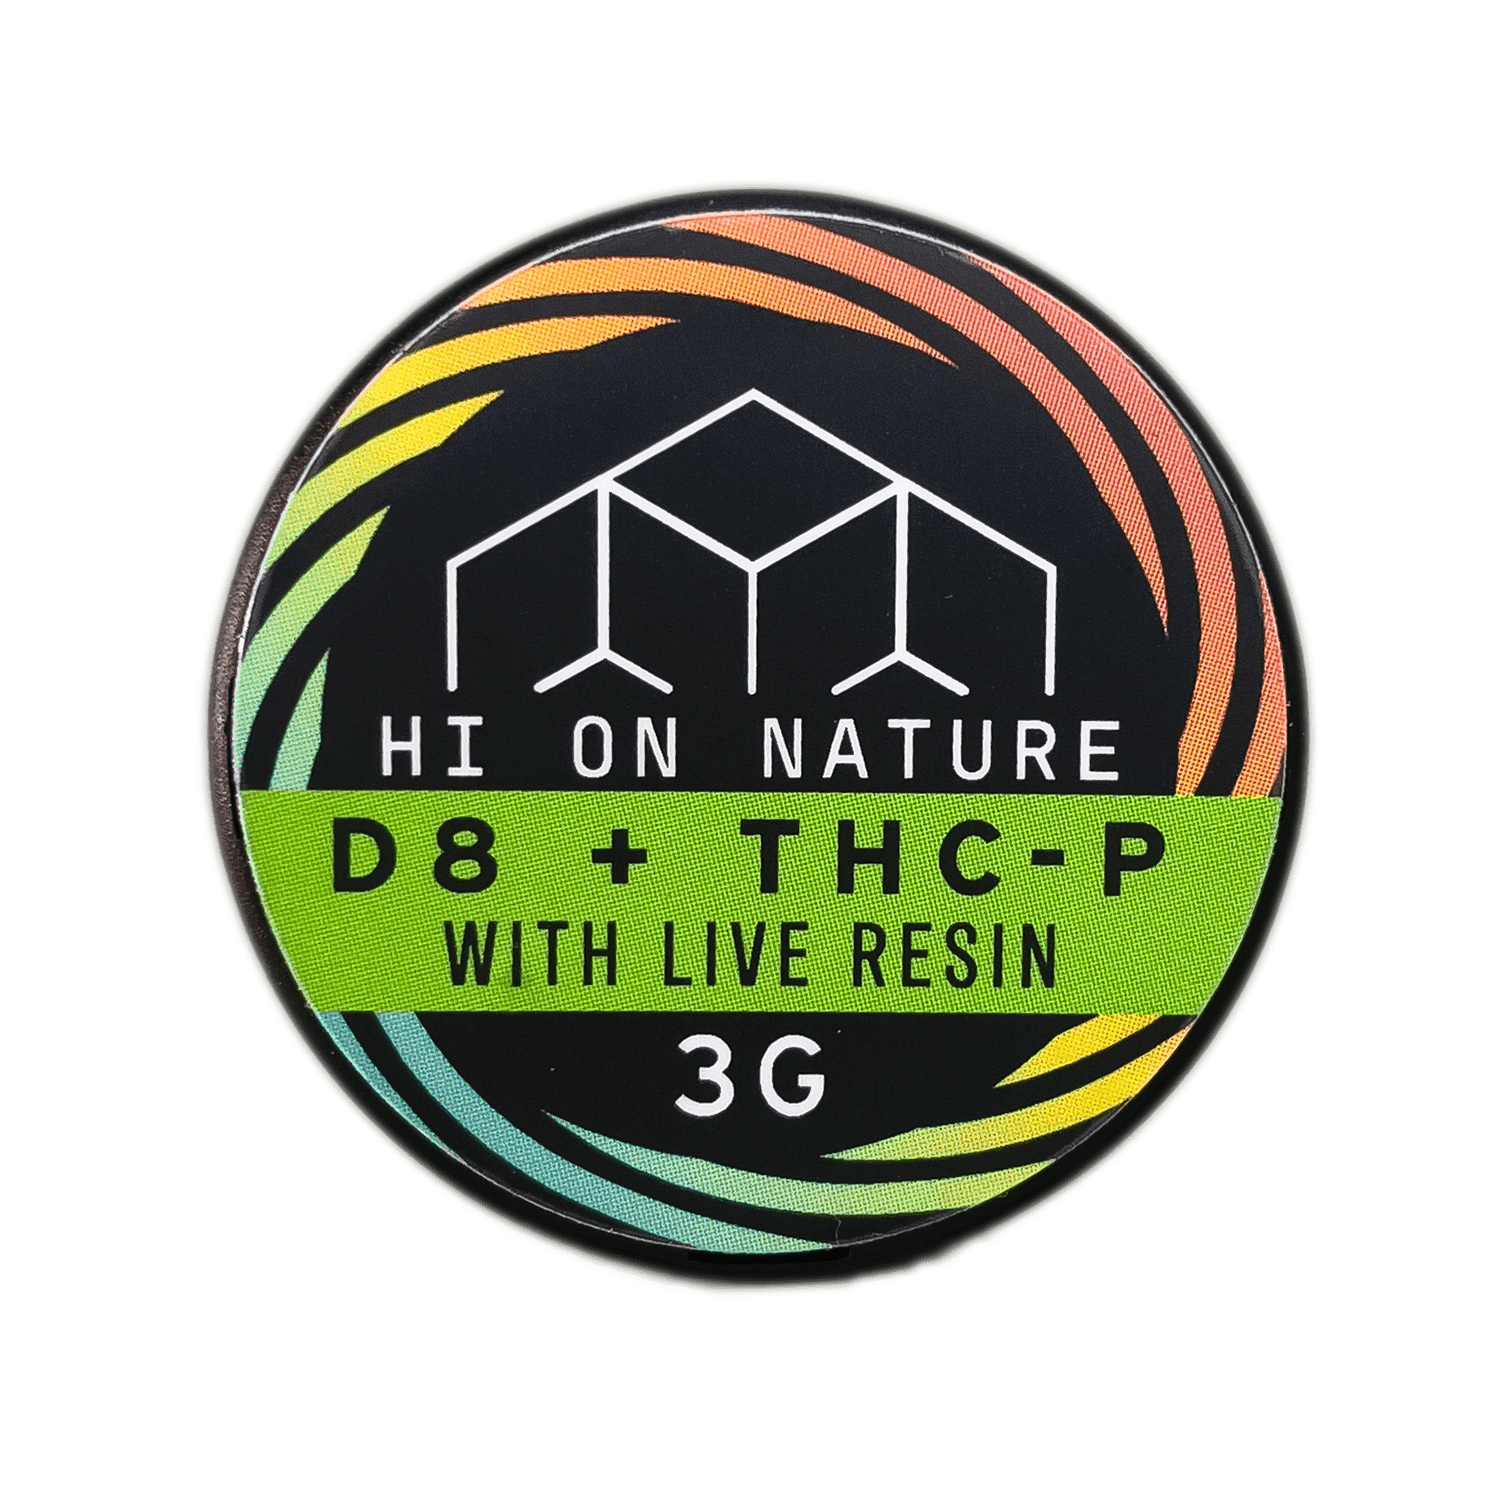 Hi On Nature 3g DELTA 8 + THC-P HYBRID DABS - CANNATONIC Best Price